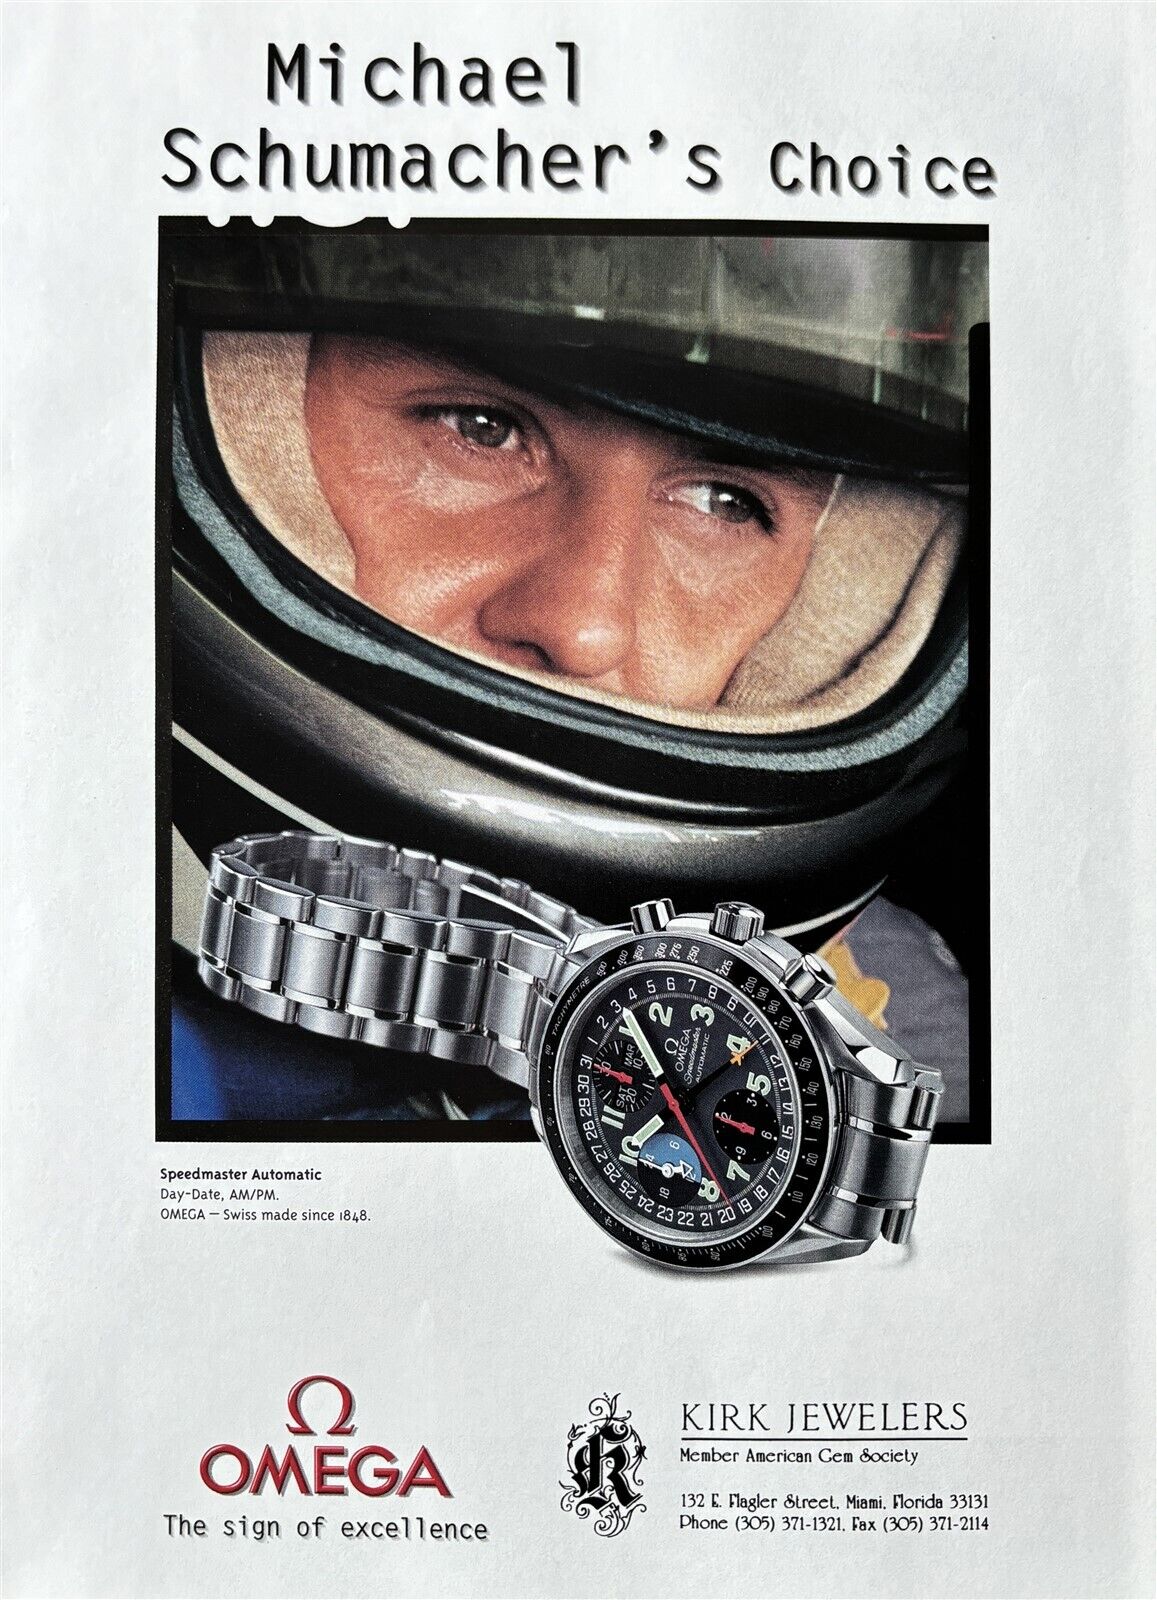 1997 OMEGA Speedmaster Watch Formula 1 Michael Schumacher's Choice PRINT AD